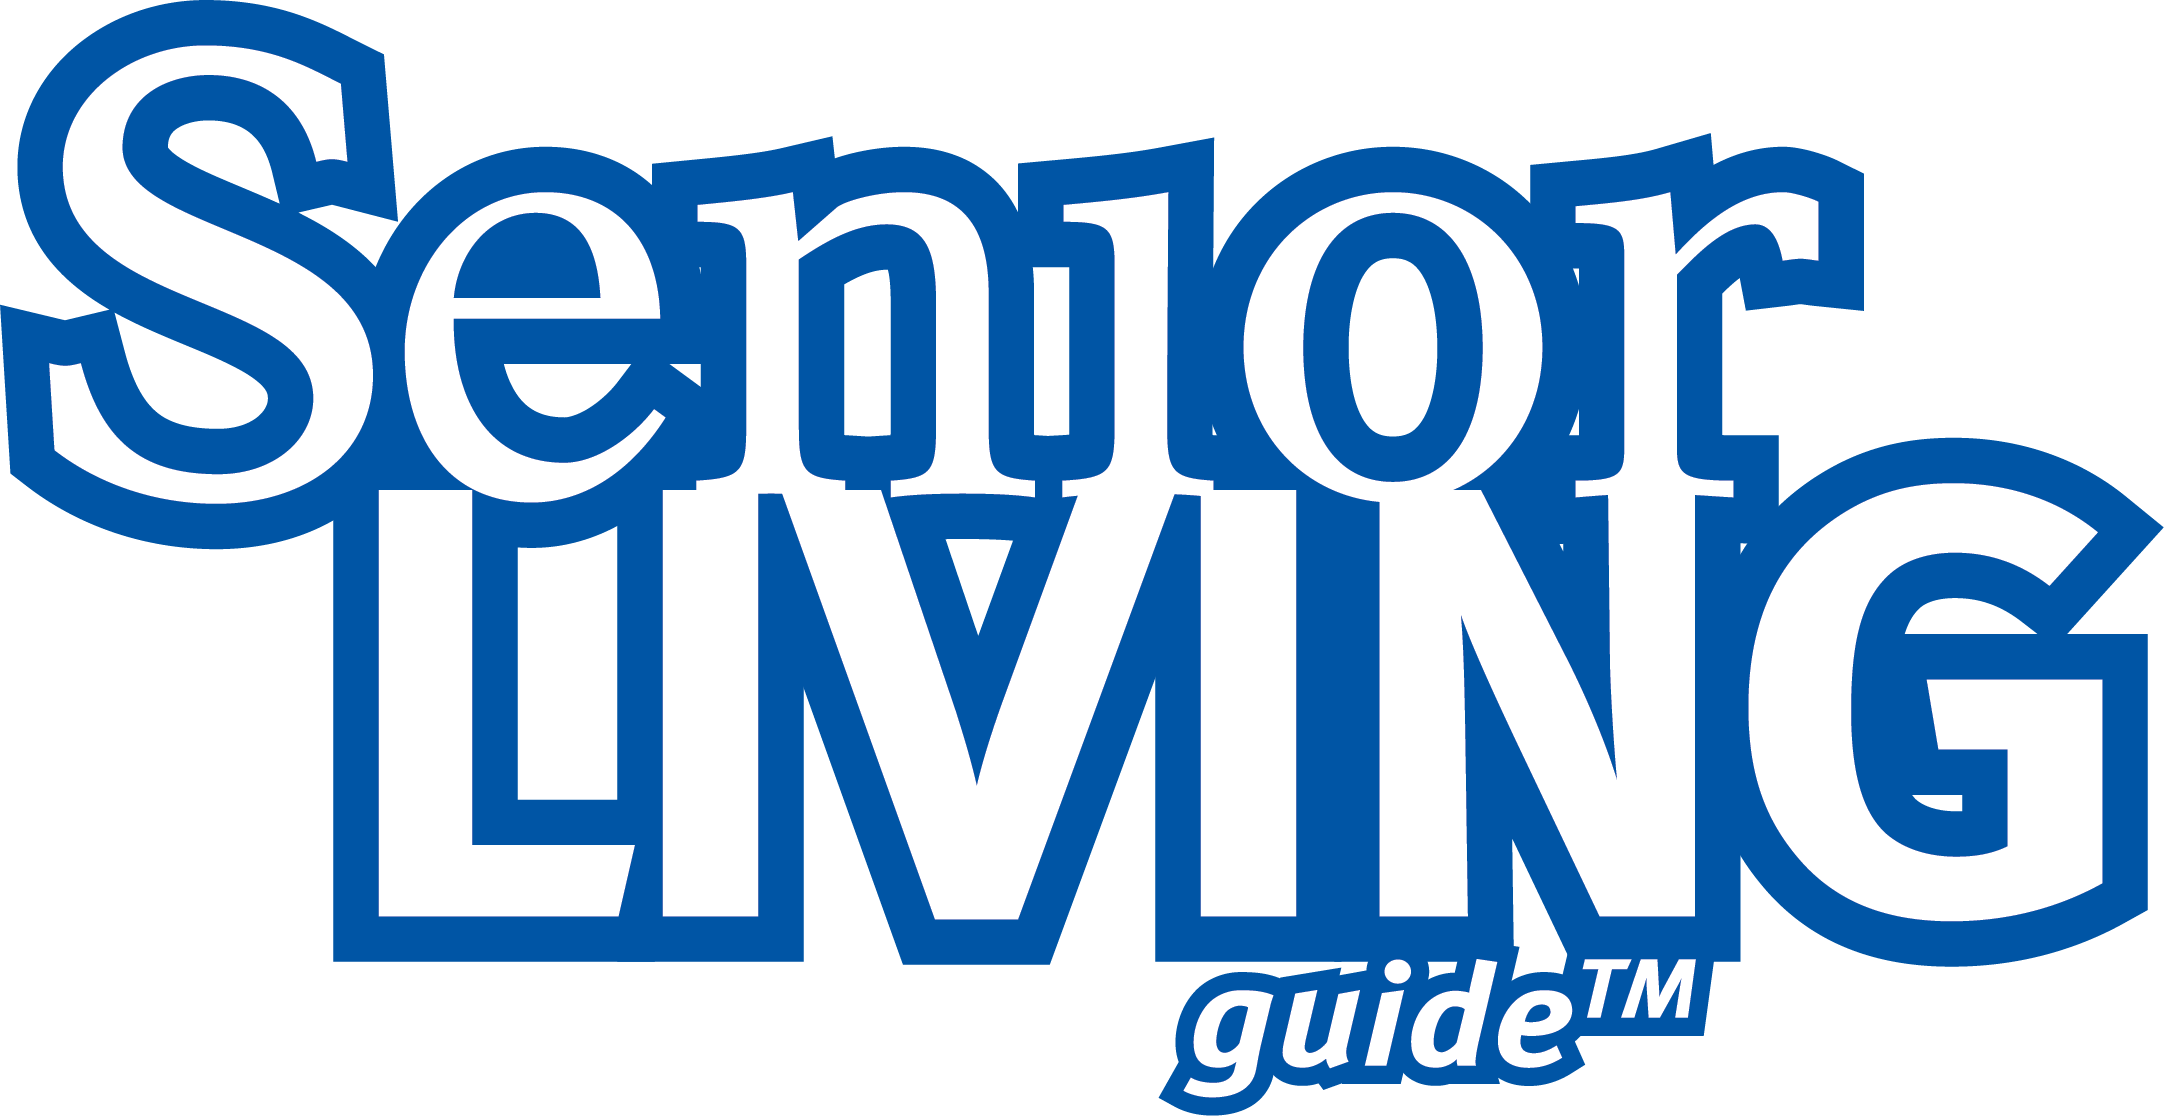 3d. Senior Living Guide (Supporting)